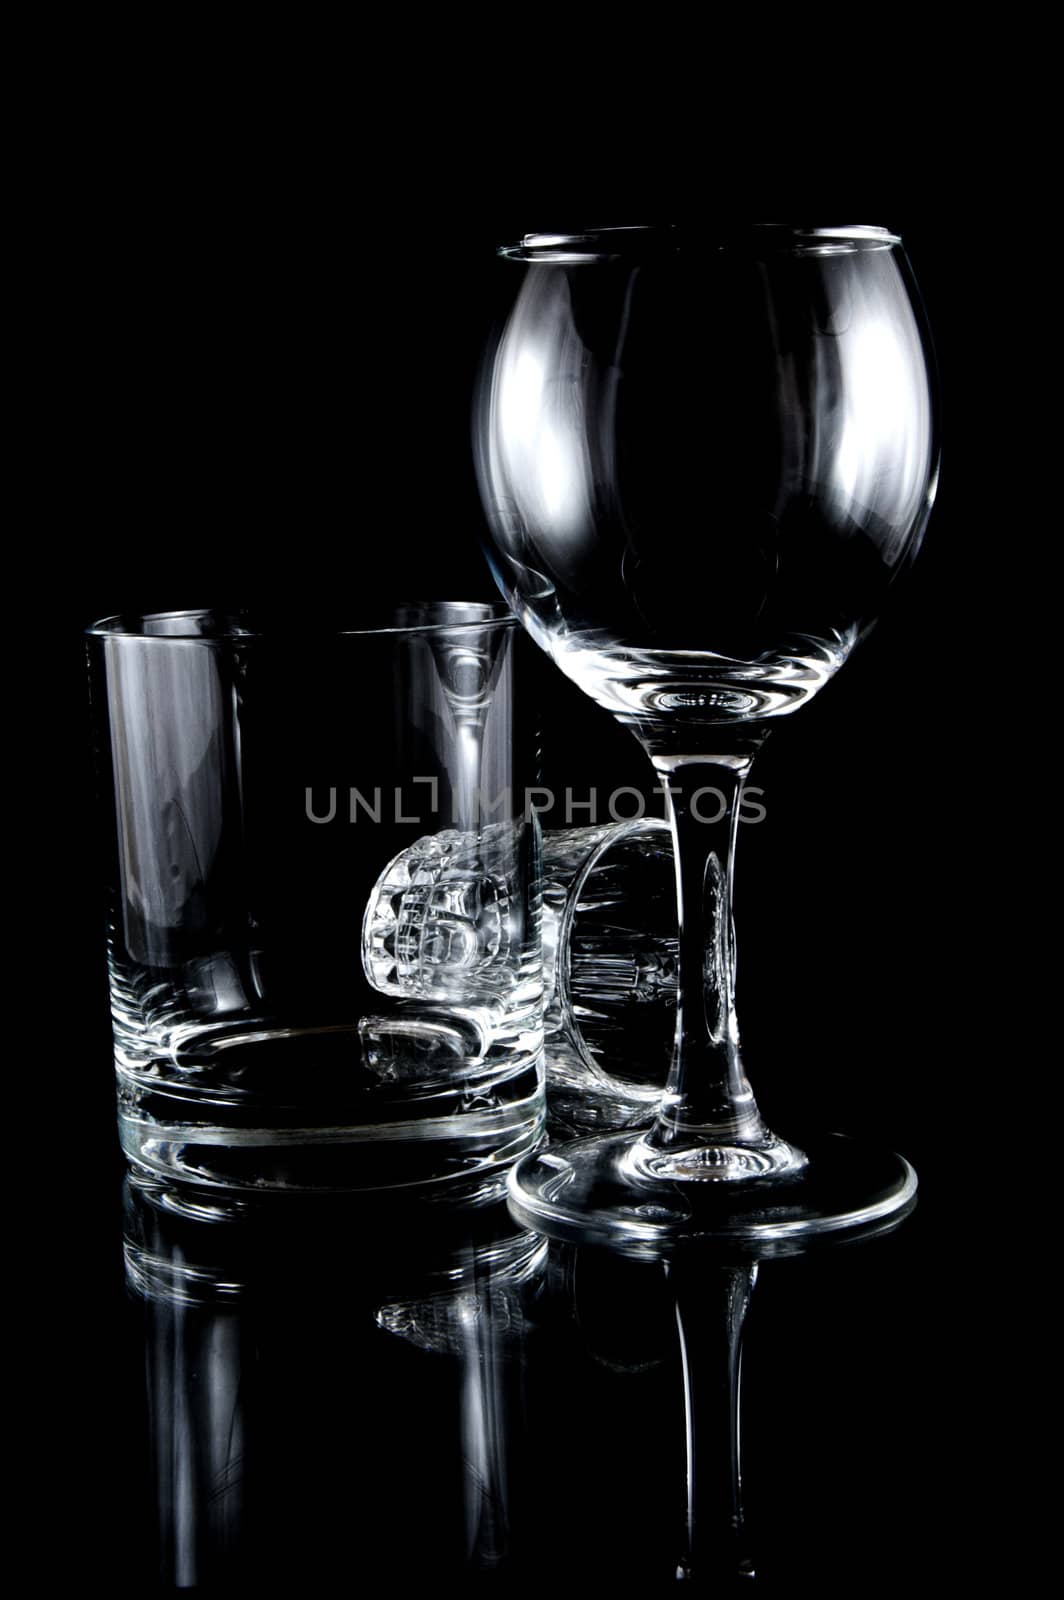 empty cocktail glasses